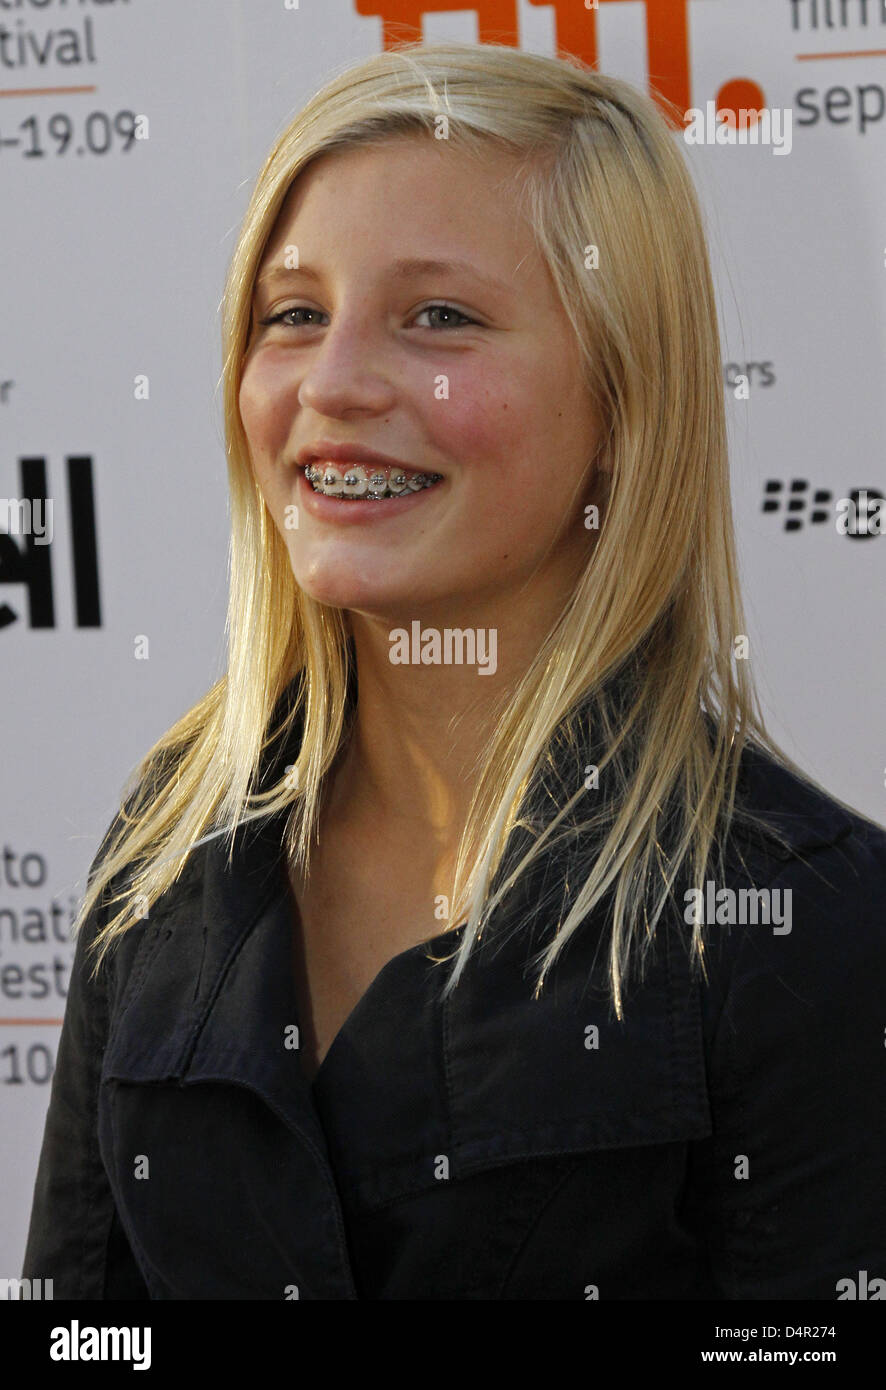 Luna Schweiger, actress and daughter of German actor Til ...